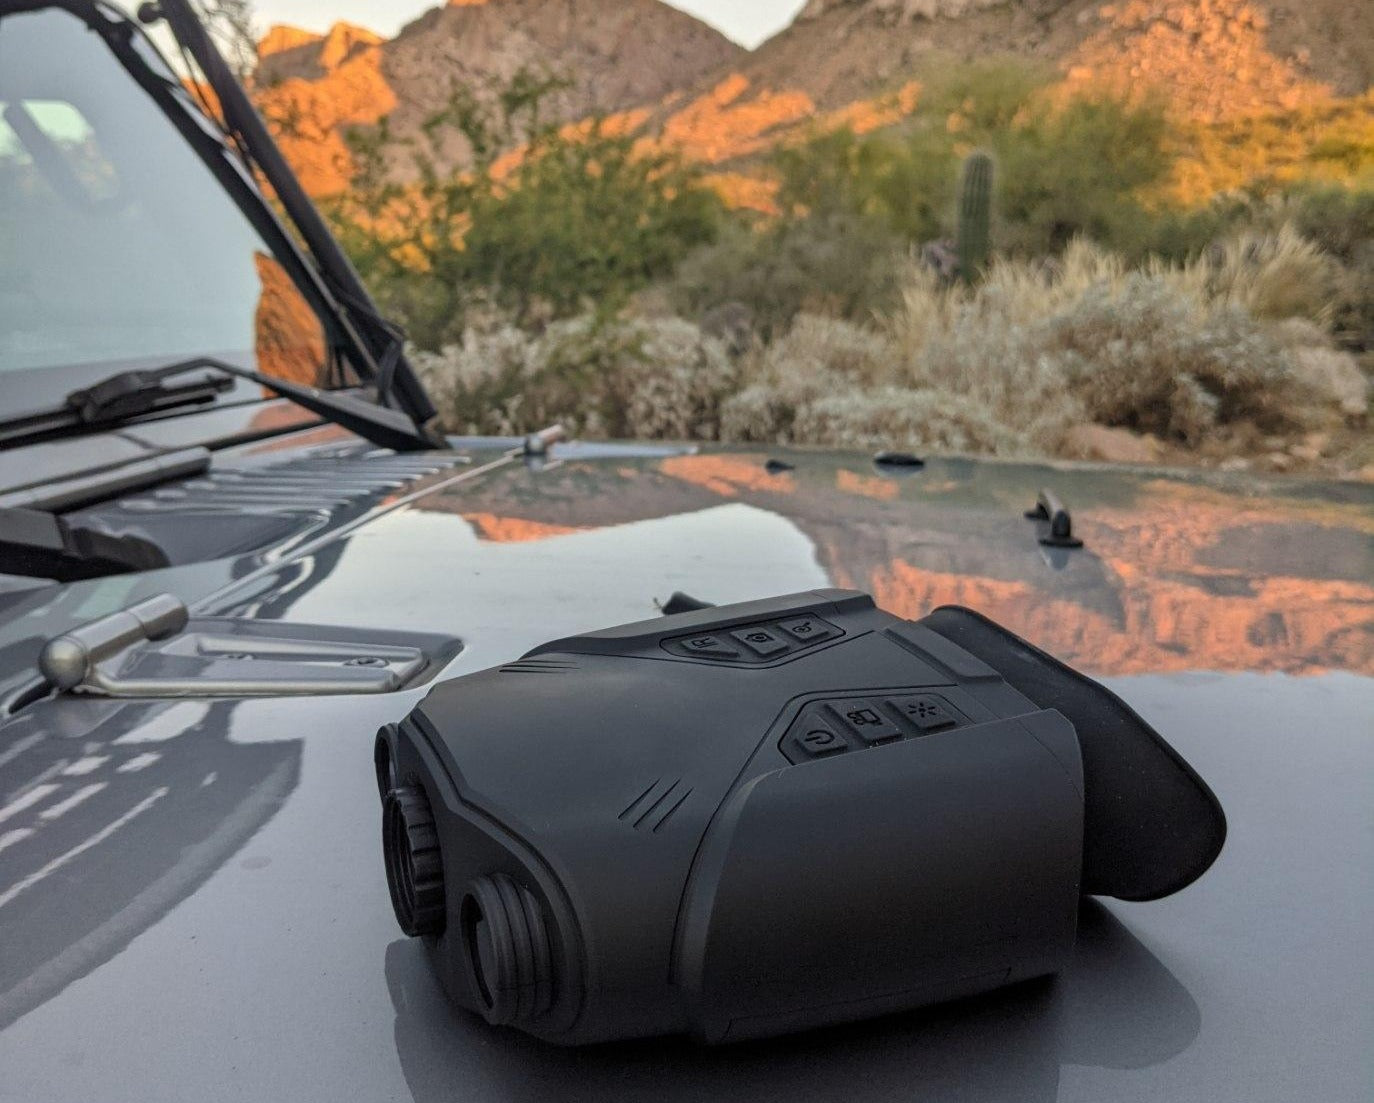 Night vision binoculars sitting on the hood of a vehicle